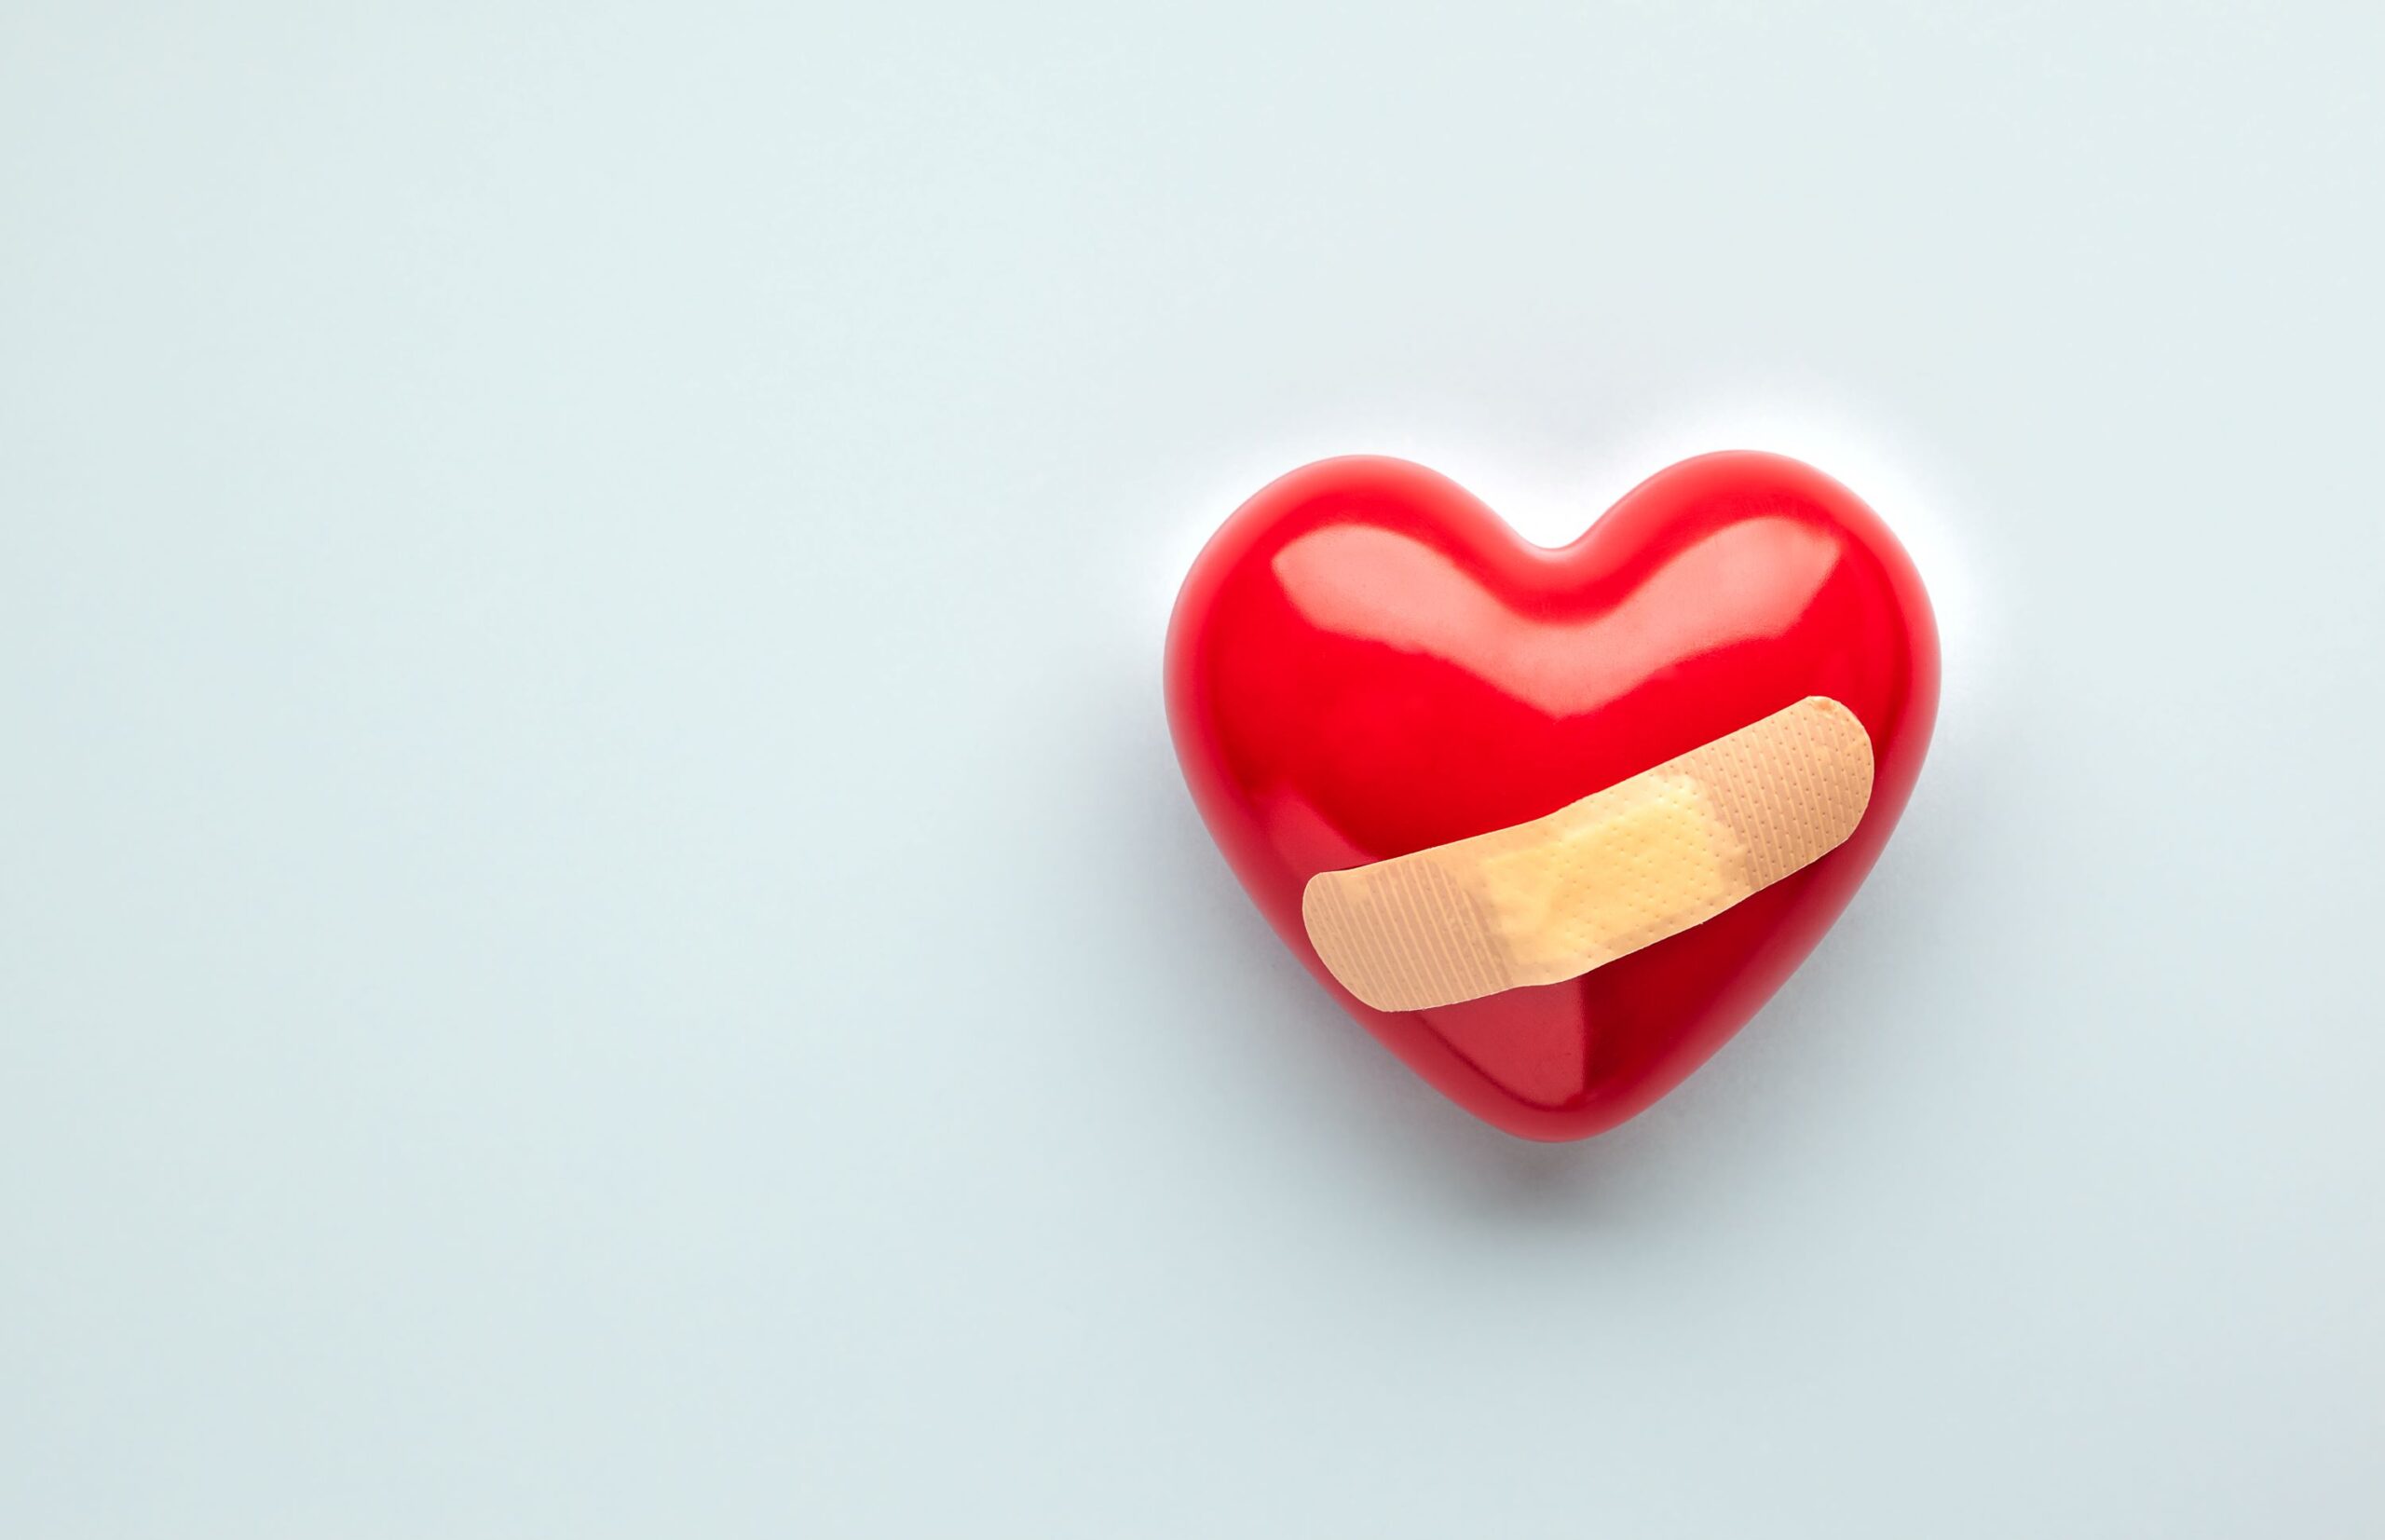 Can hydrogels help mend a broken heart?